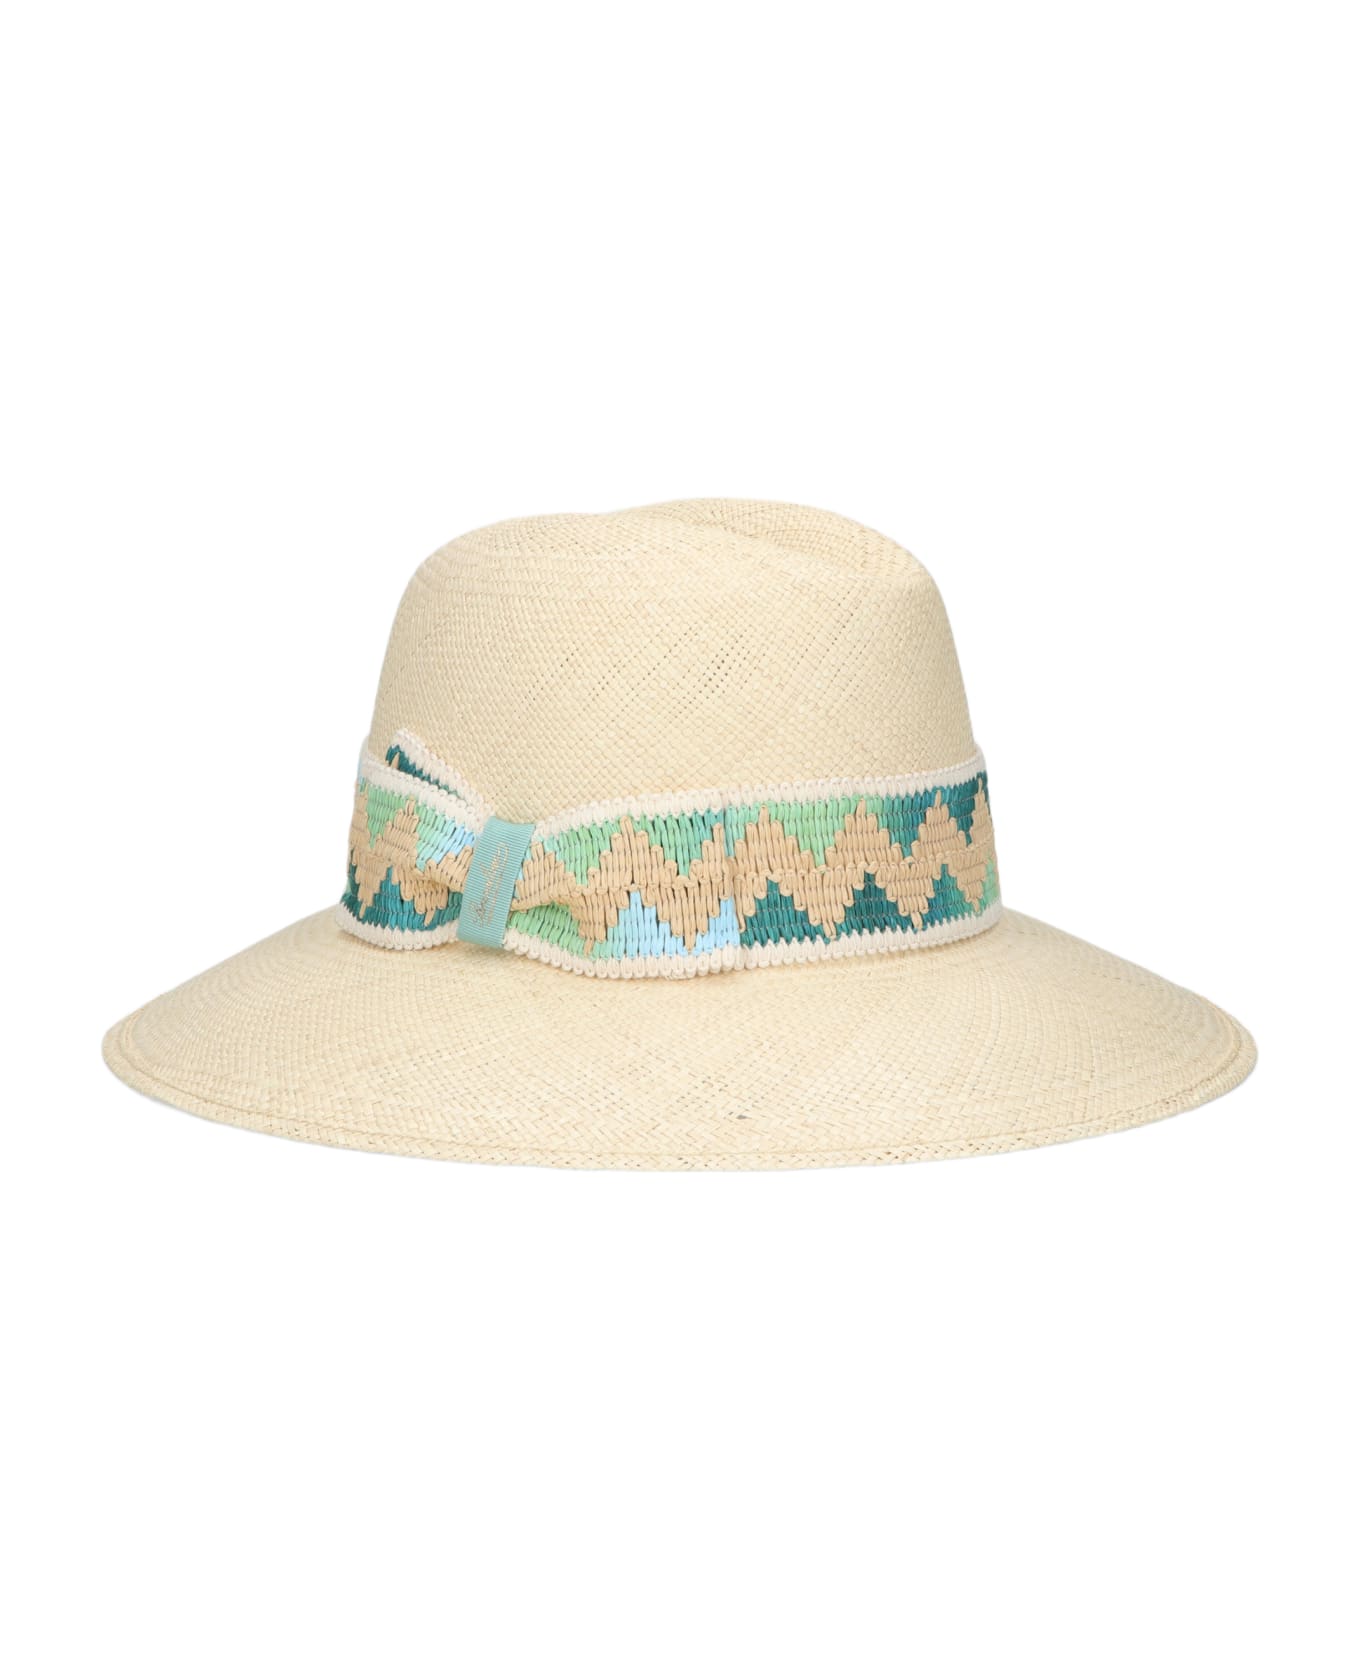 Borsalino Claudette Panama Quito Patterned Hatband - NATURAL, PATTERNED AQUA GREEN HAT BAND